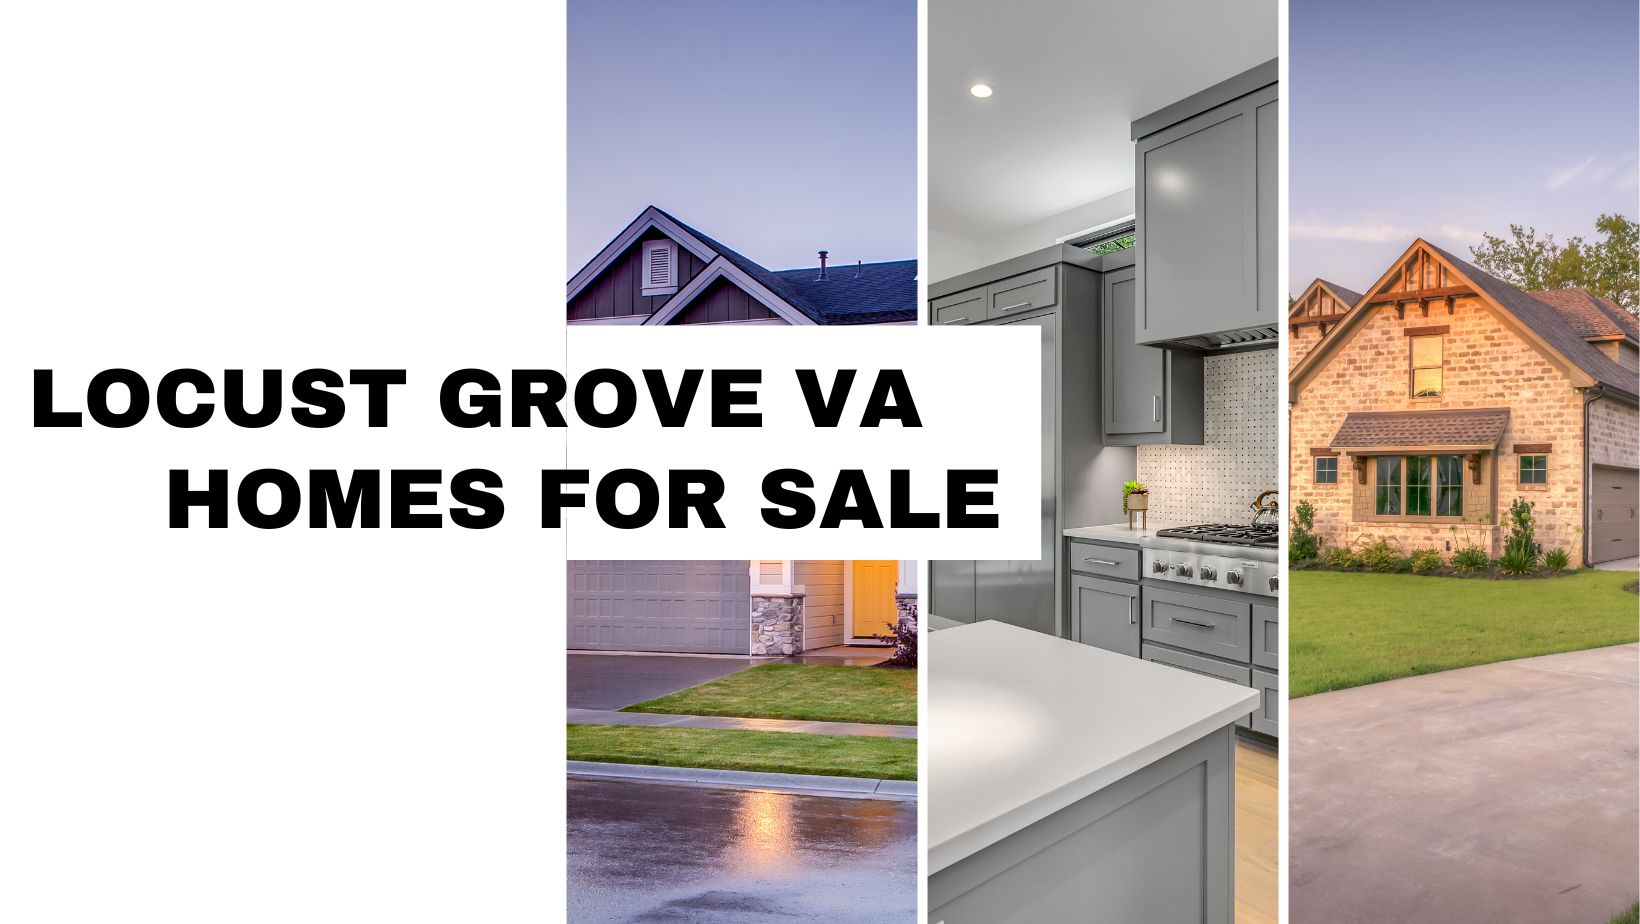 Locust Grove VA Homes for Sale Orange County